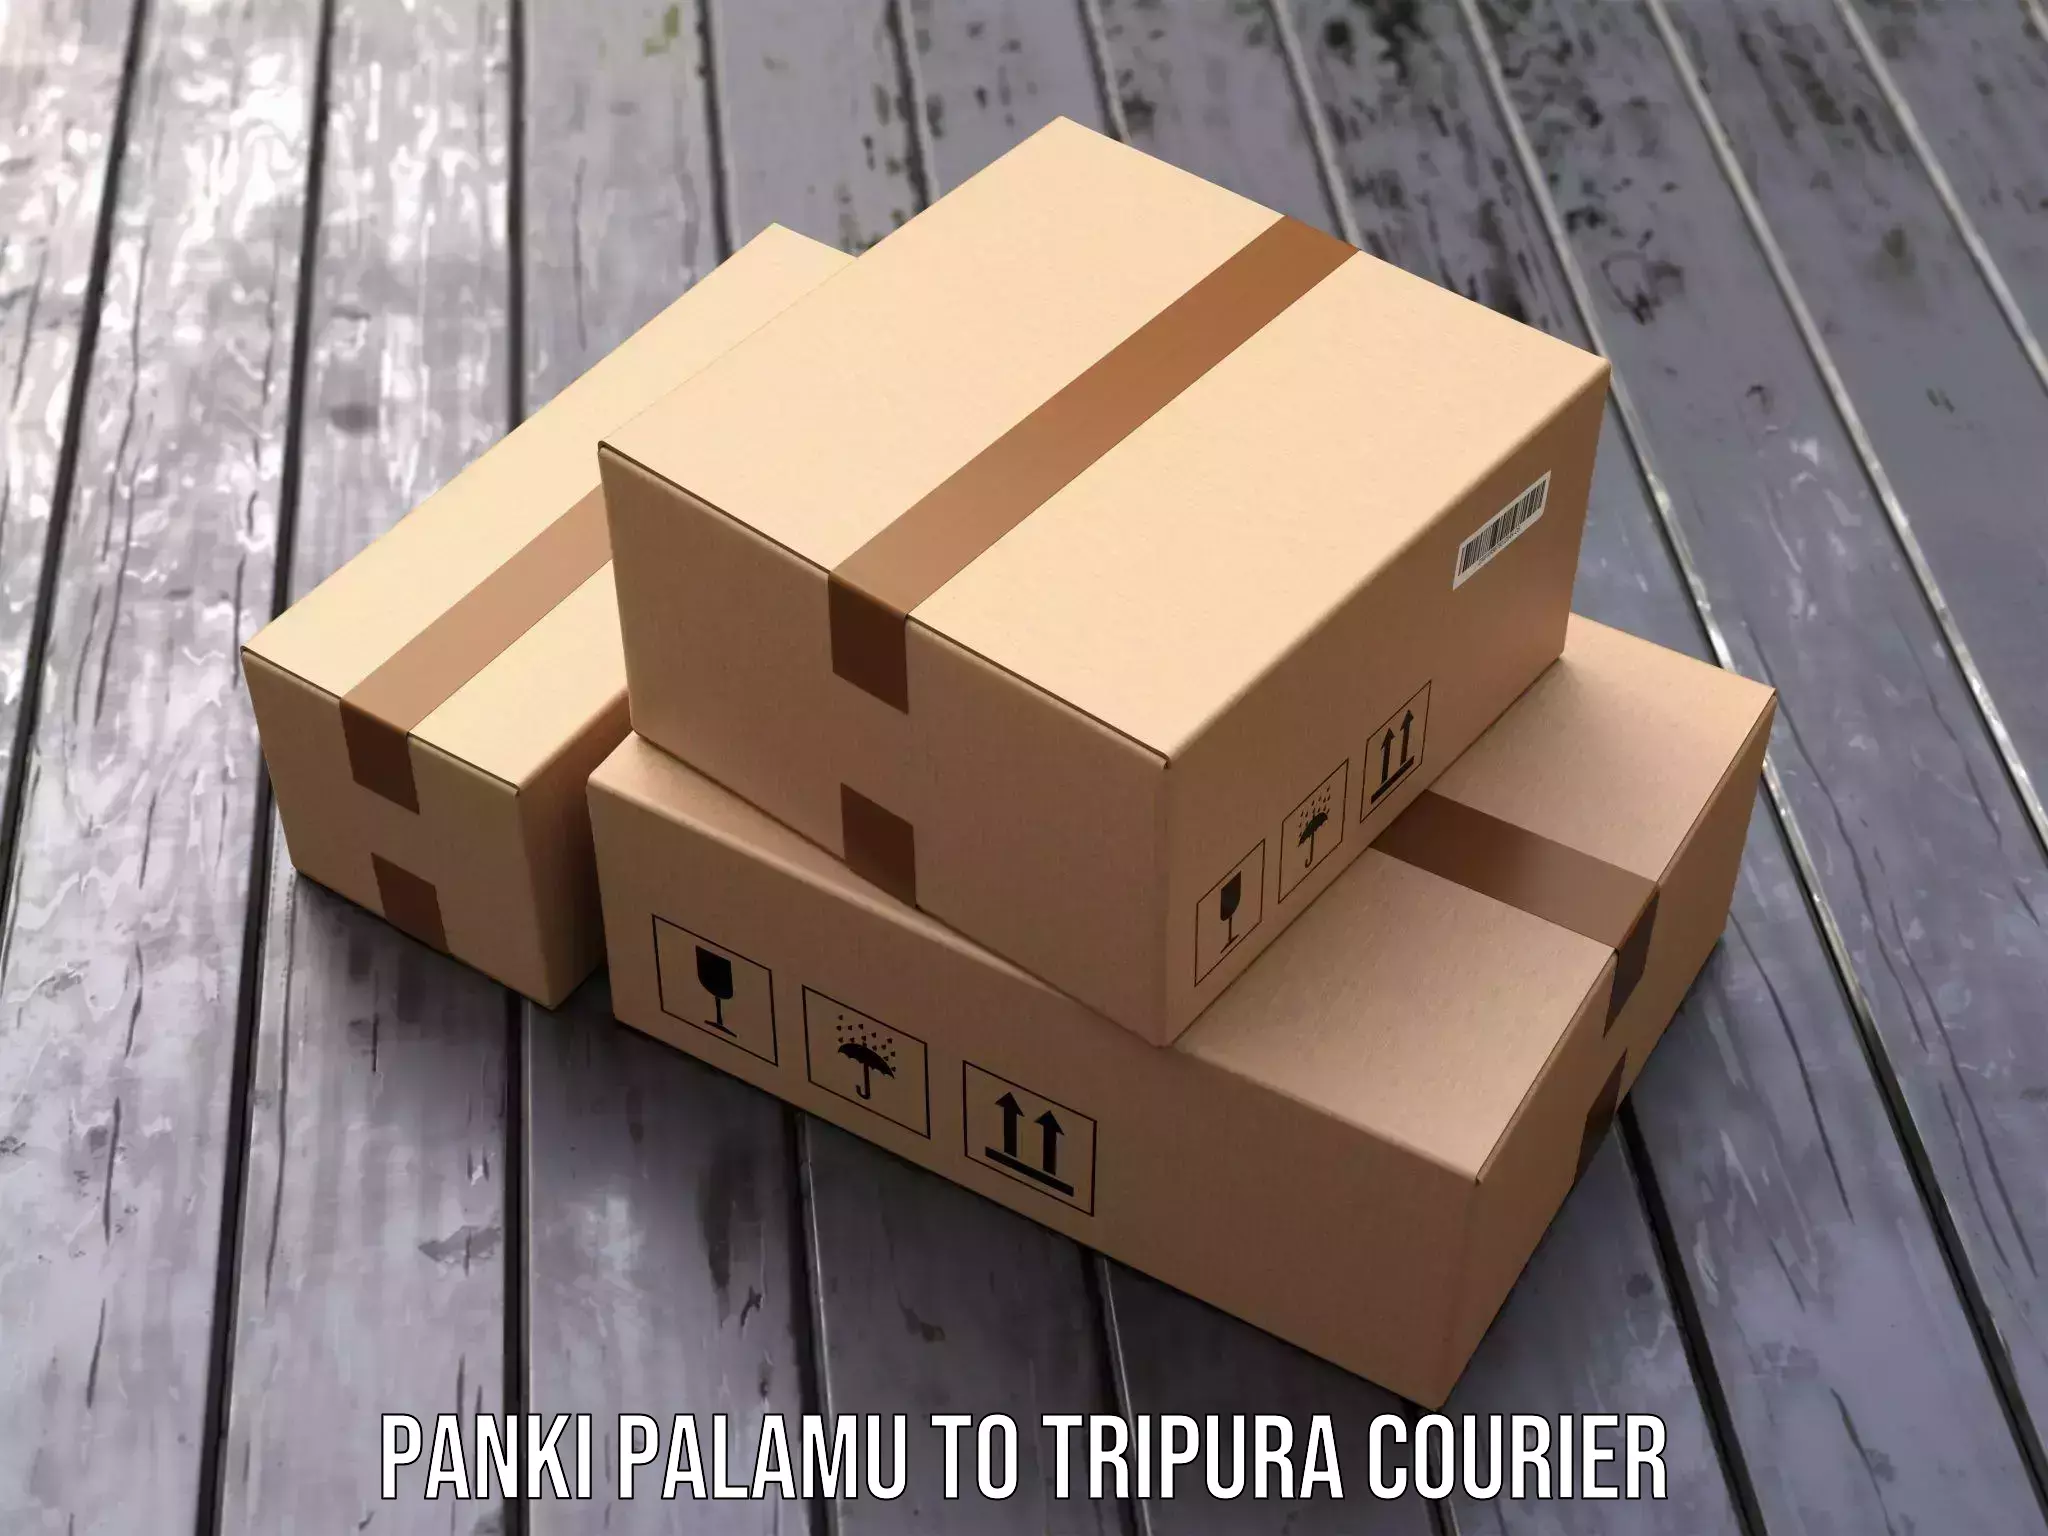 Express delivery capabilities Panki Palamu to Tripura